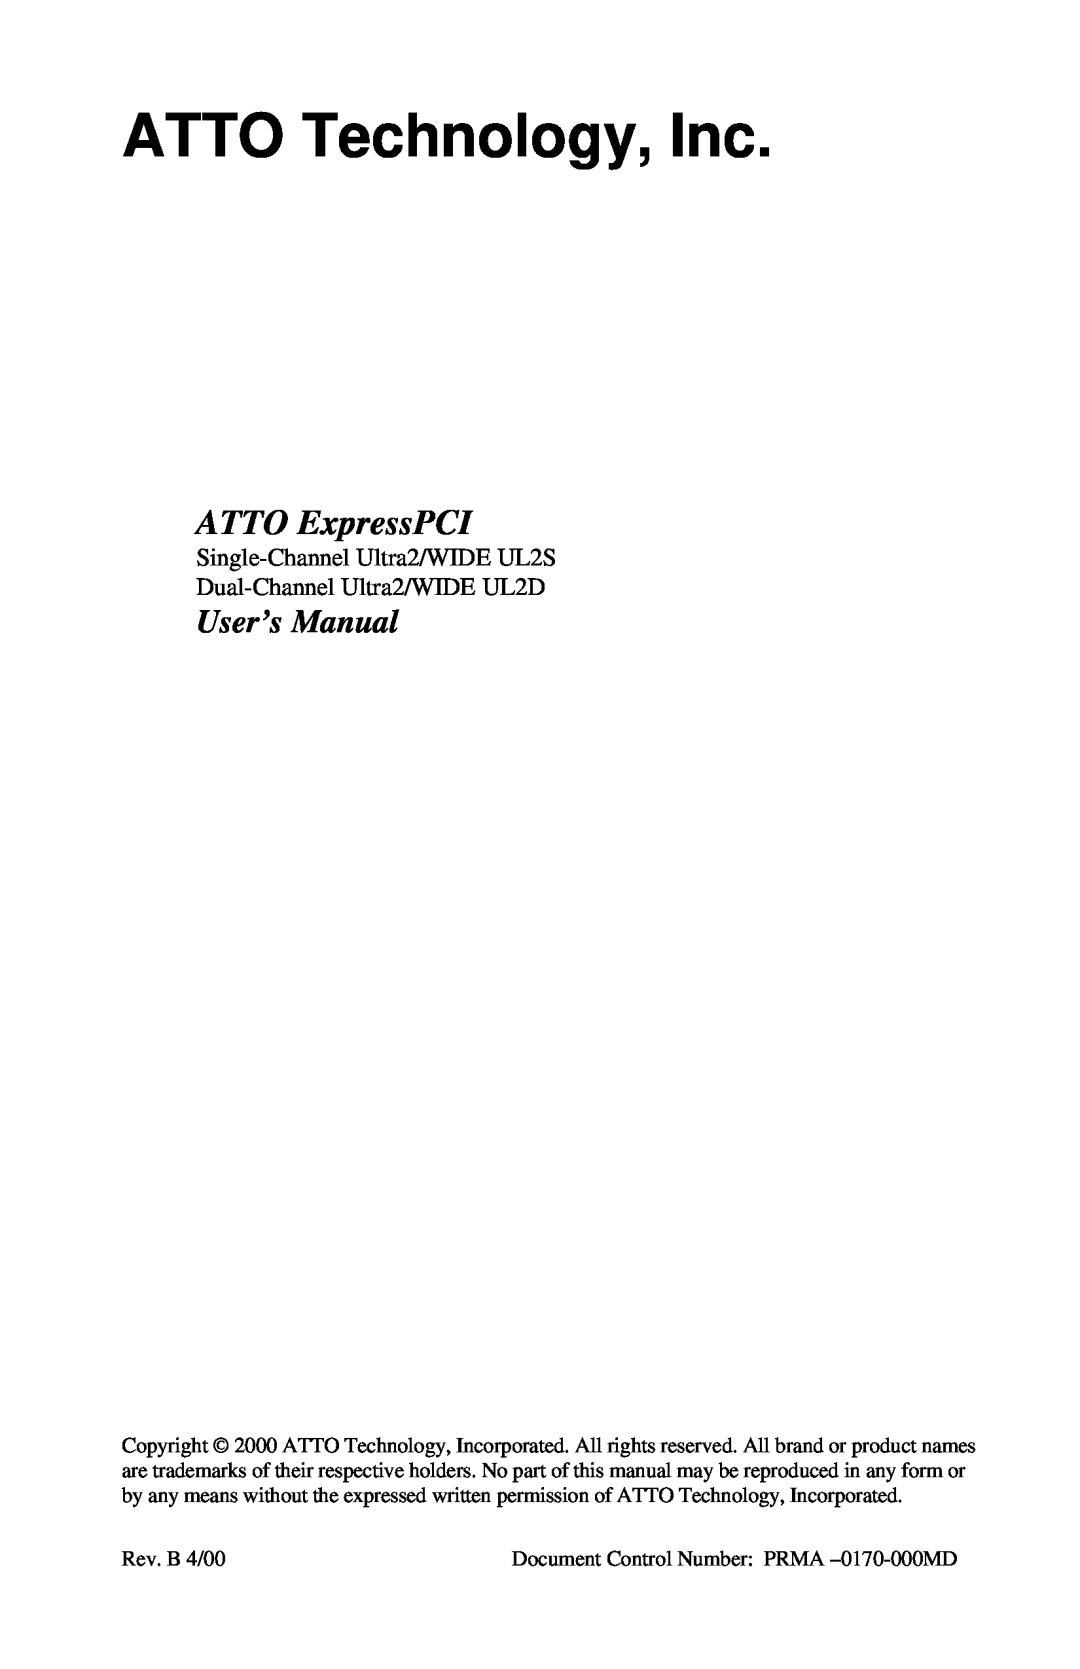 ATTO Technology UL25, UL2D user manual User’s Manual, ATTO Technology, Inc, ATTO ExpressPCI, Rev. B 4/00 